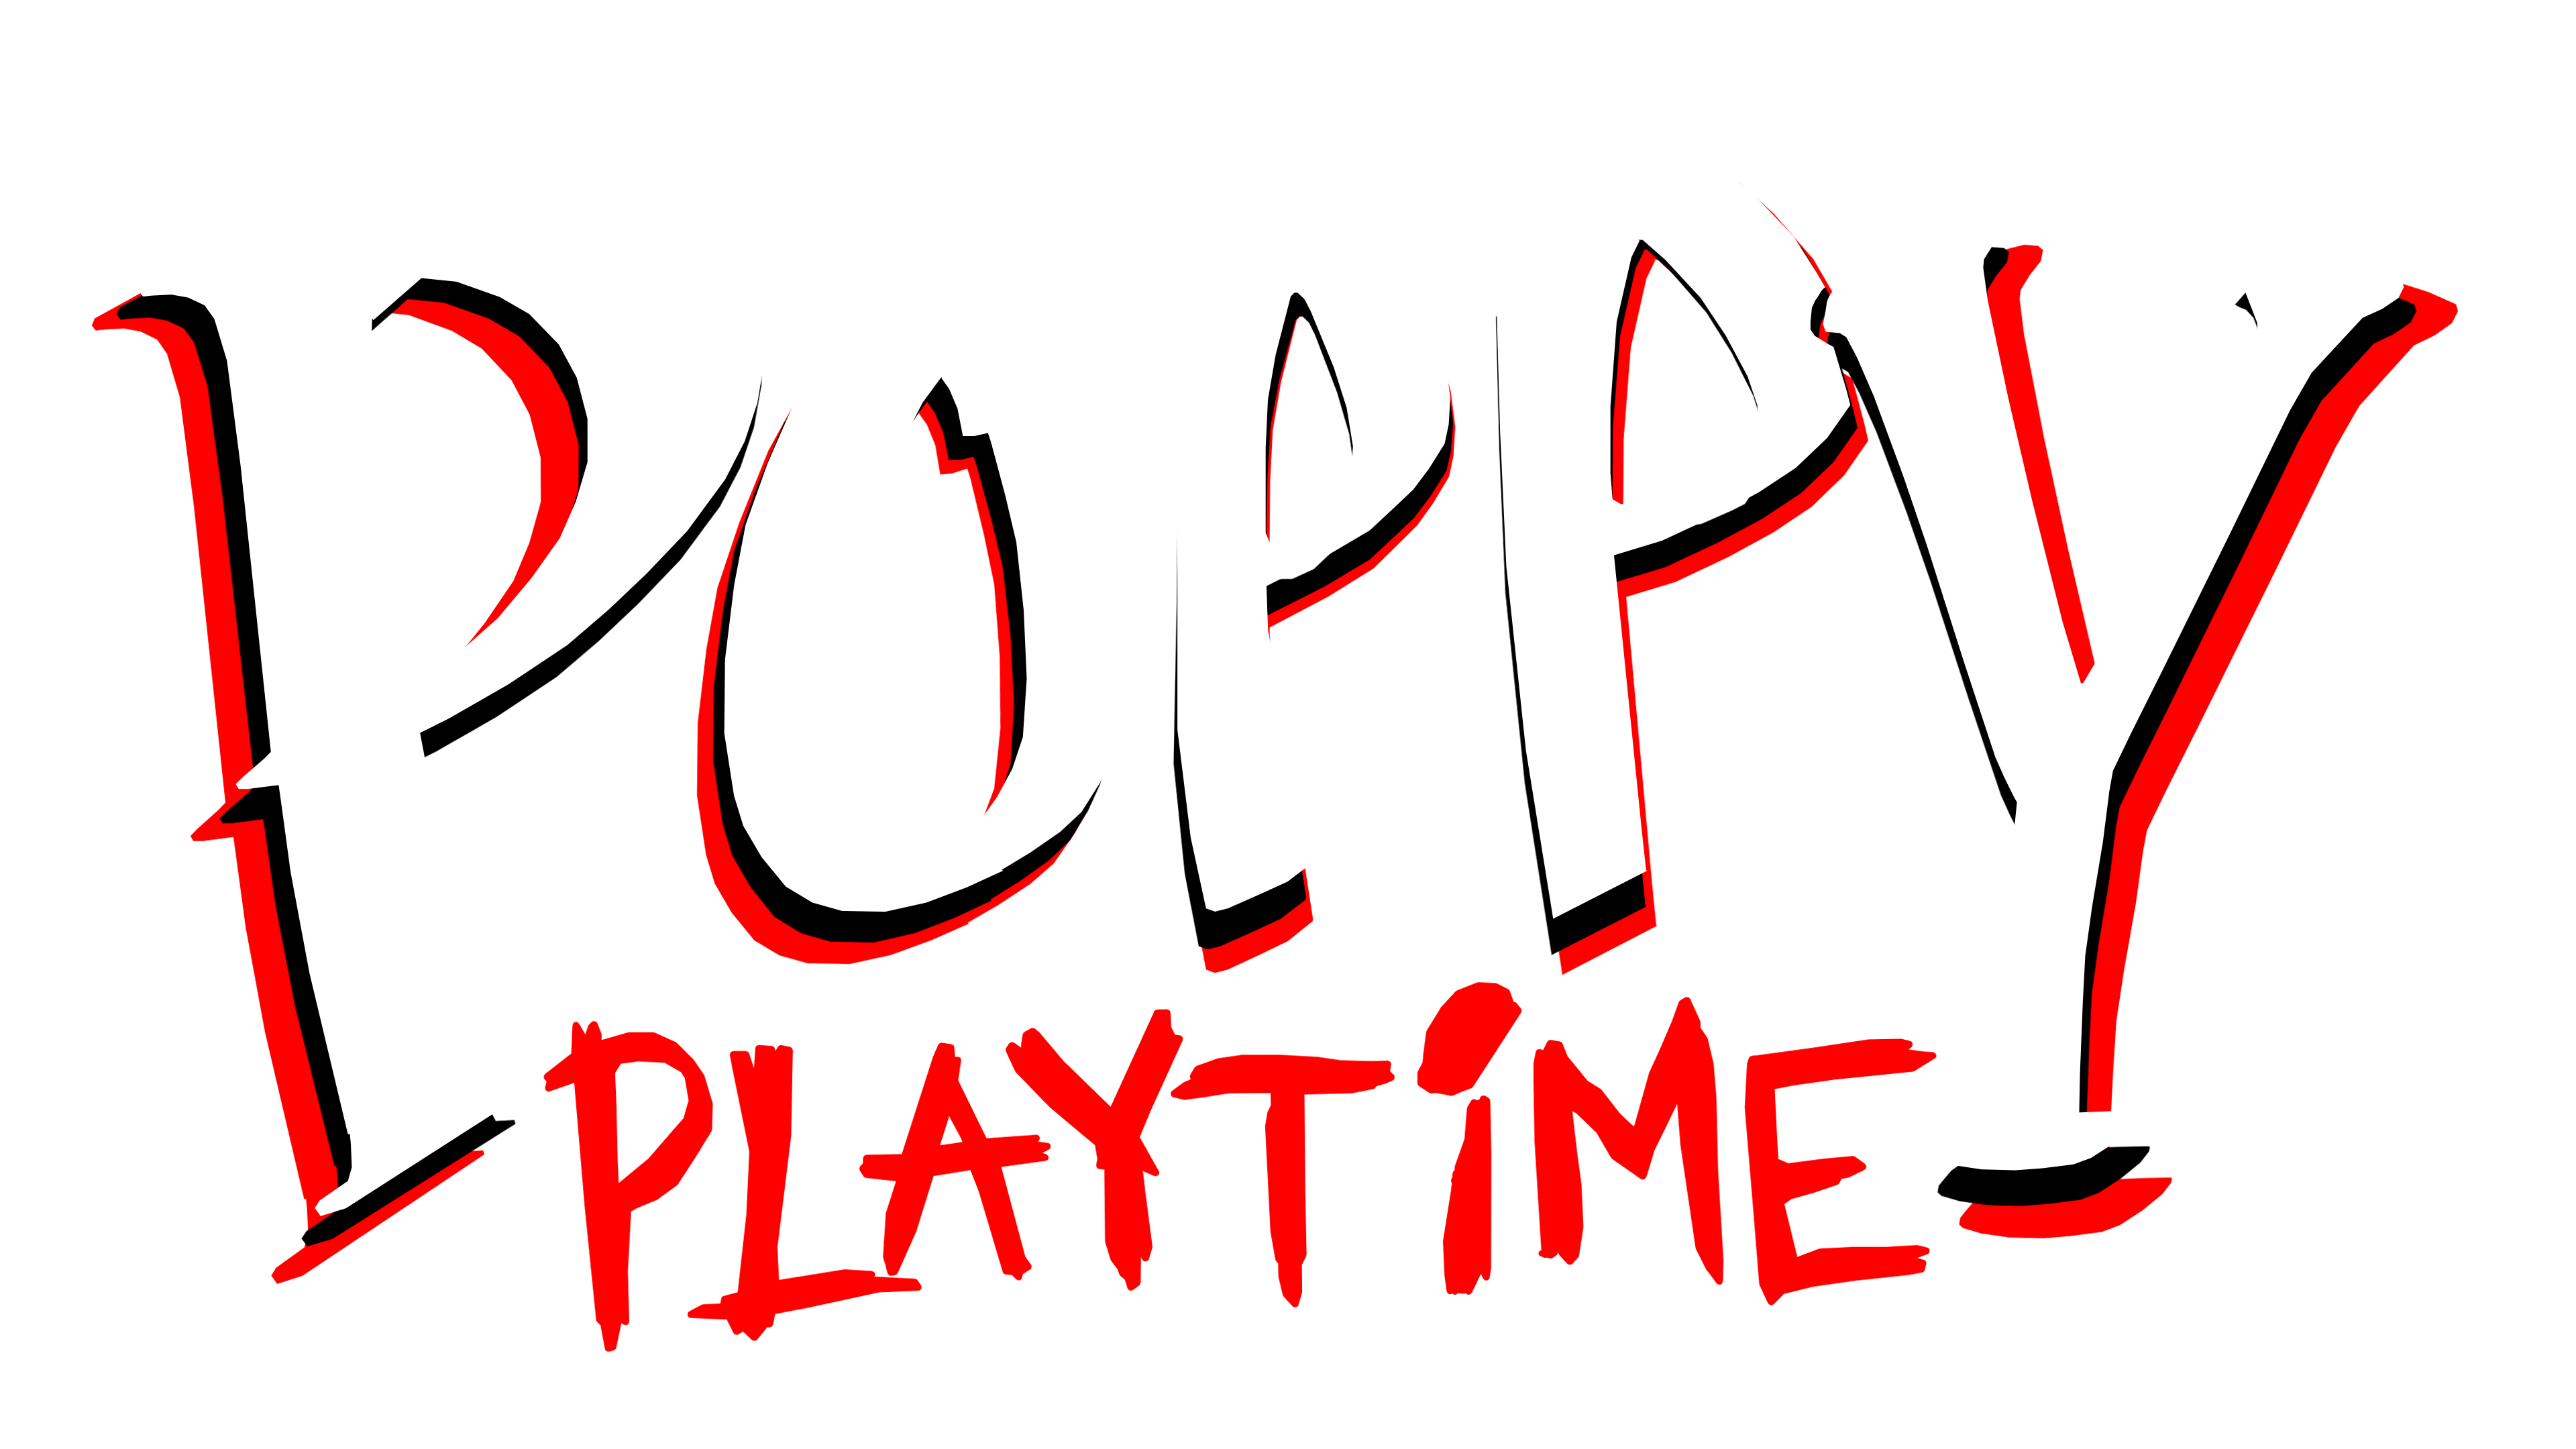 New posts in Gameplay - Poppy Playtime Community on Game Jolt